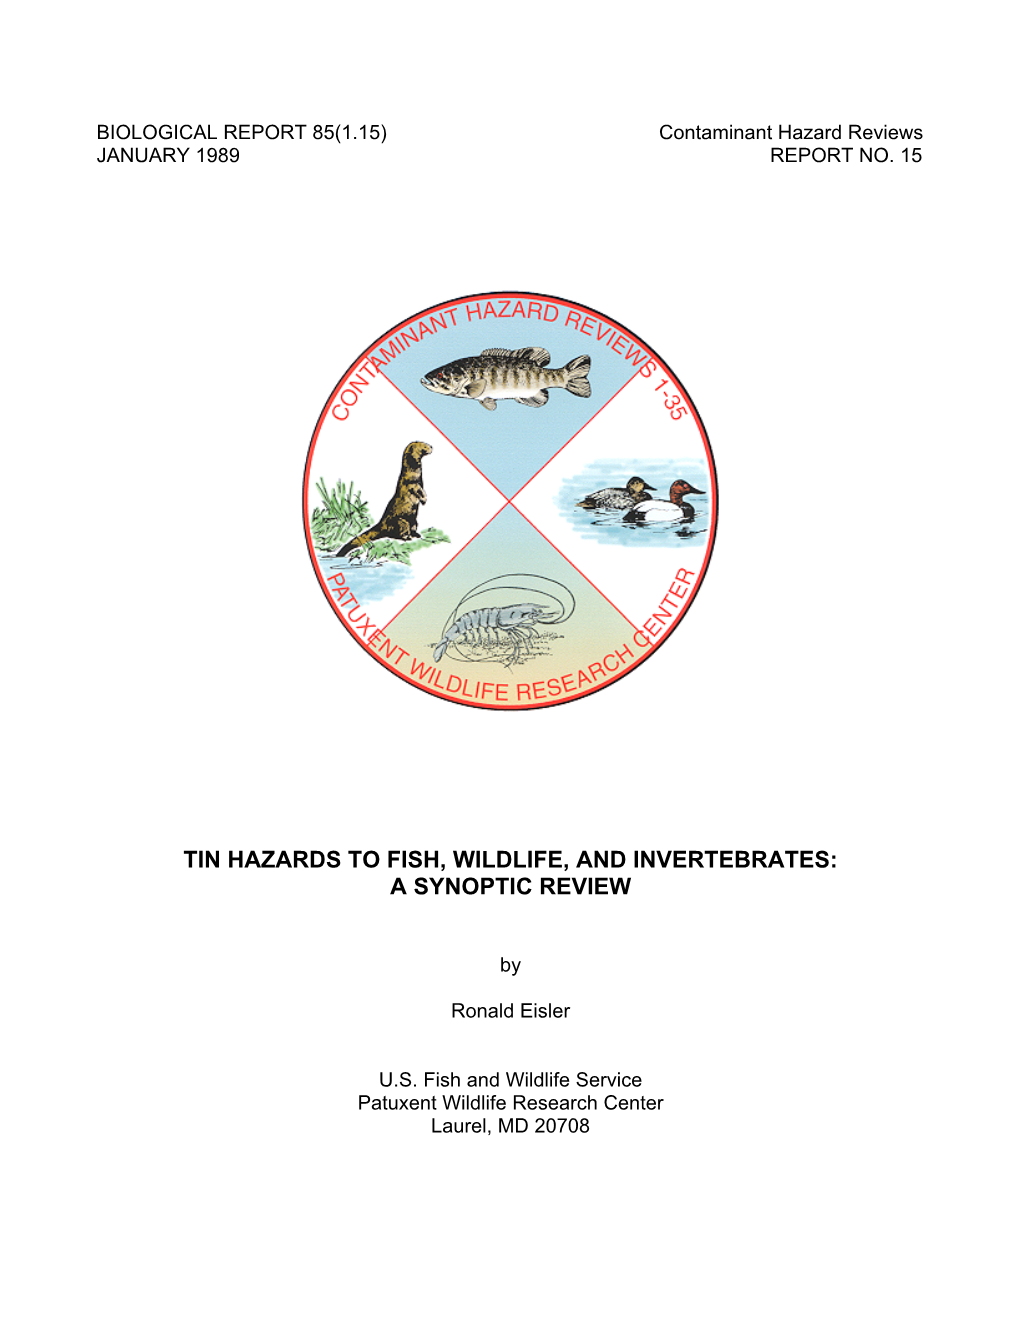 Tin Hazards to Fish, Wildlife, and Invertebrates: a Synoptic Review